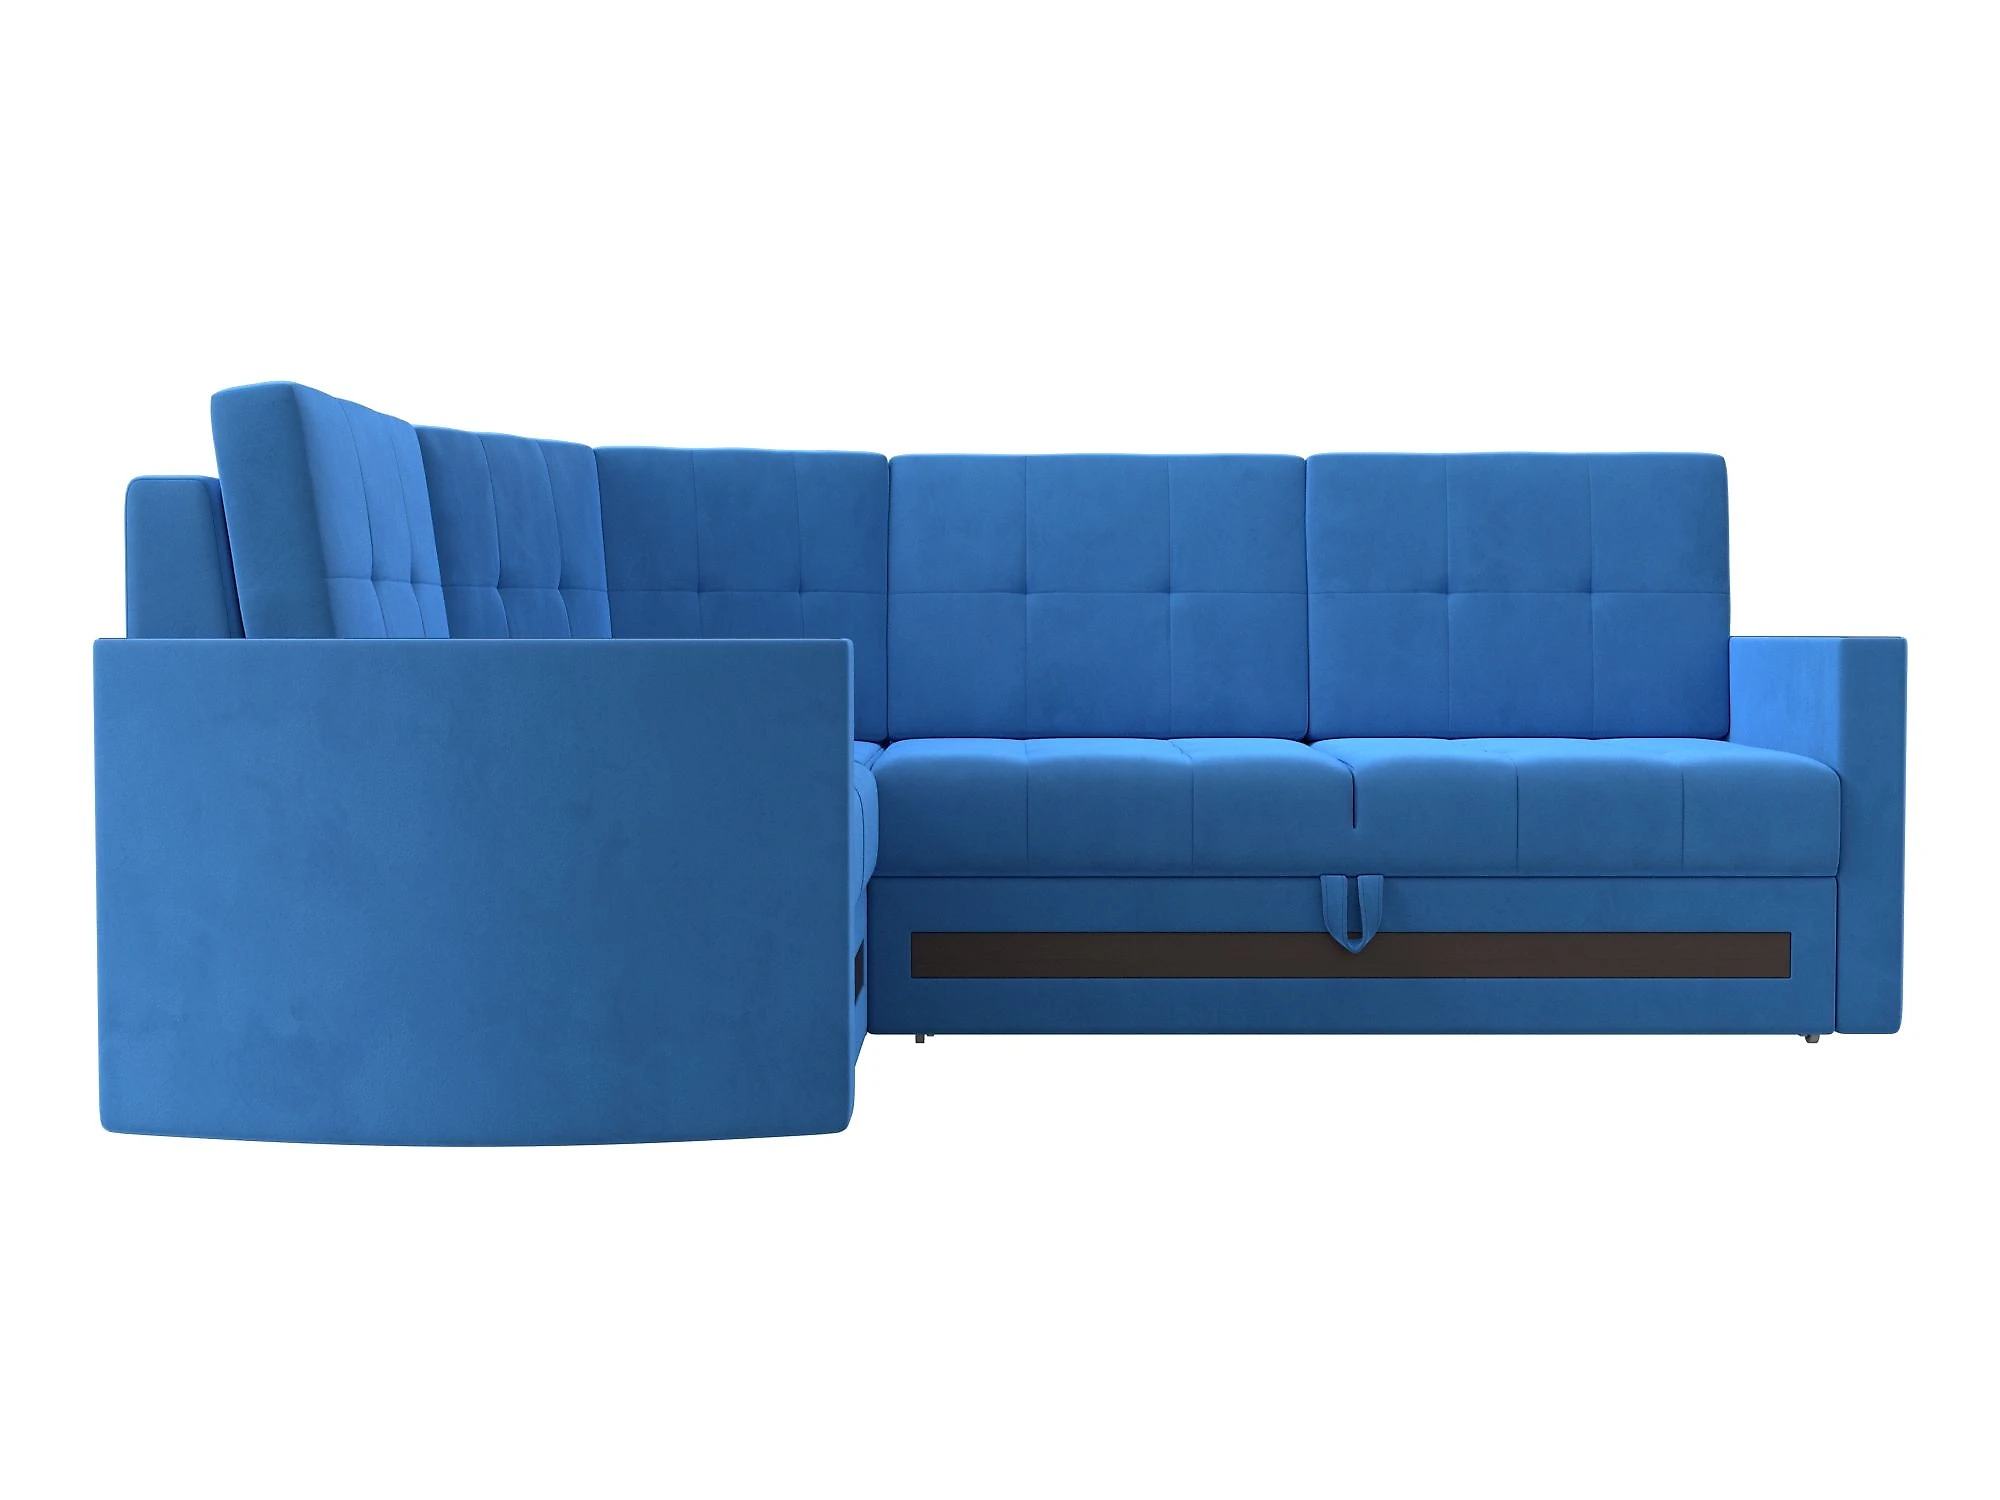  голубой диван  Белла Плюш Дизайн 5